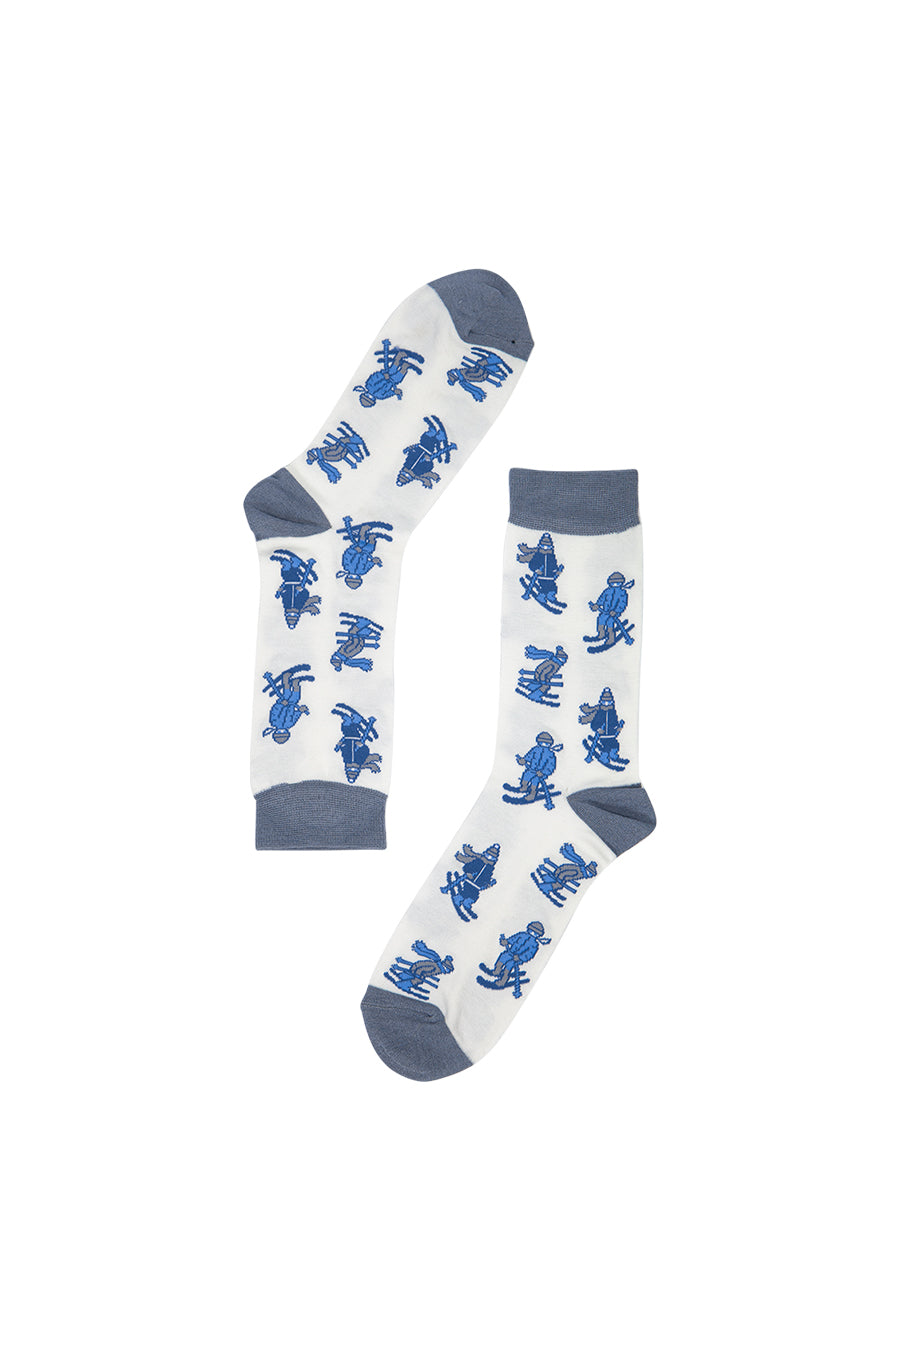 white bamboo socks with blue cartoon skiers